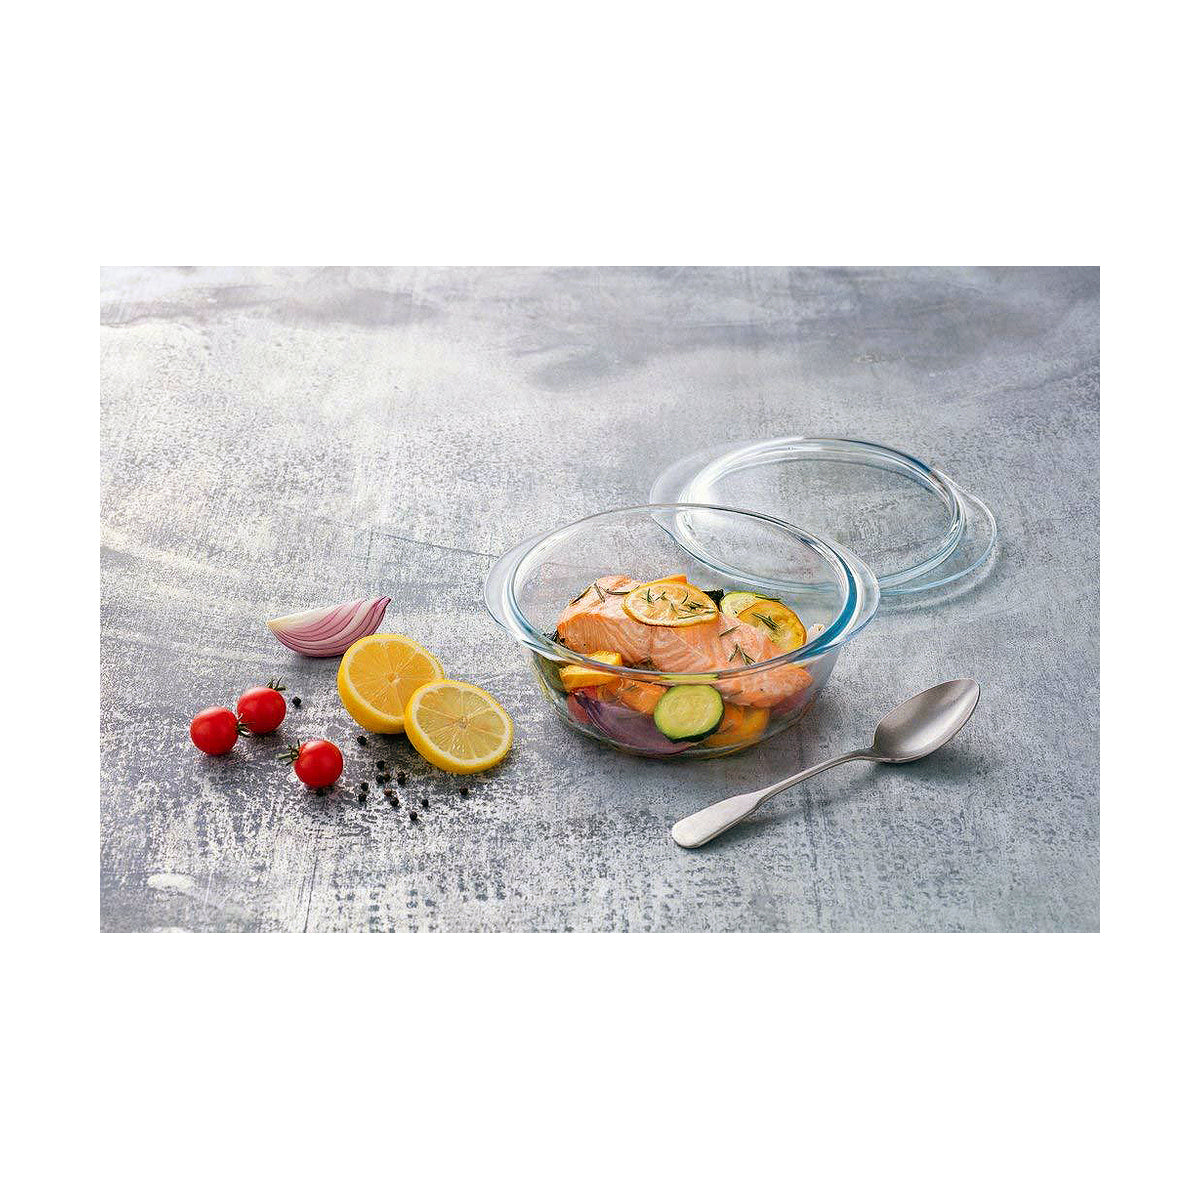 Kookpot met Deksel Pyrex Essentials Transparant Glas 2,1 L